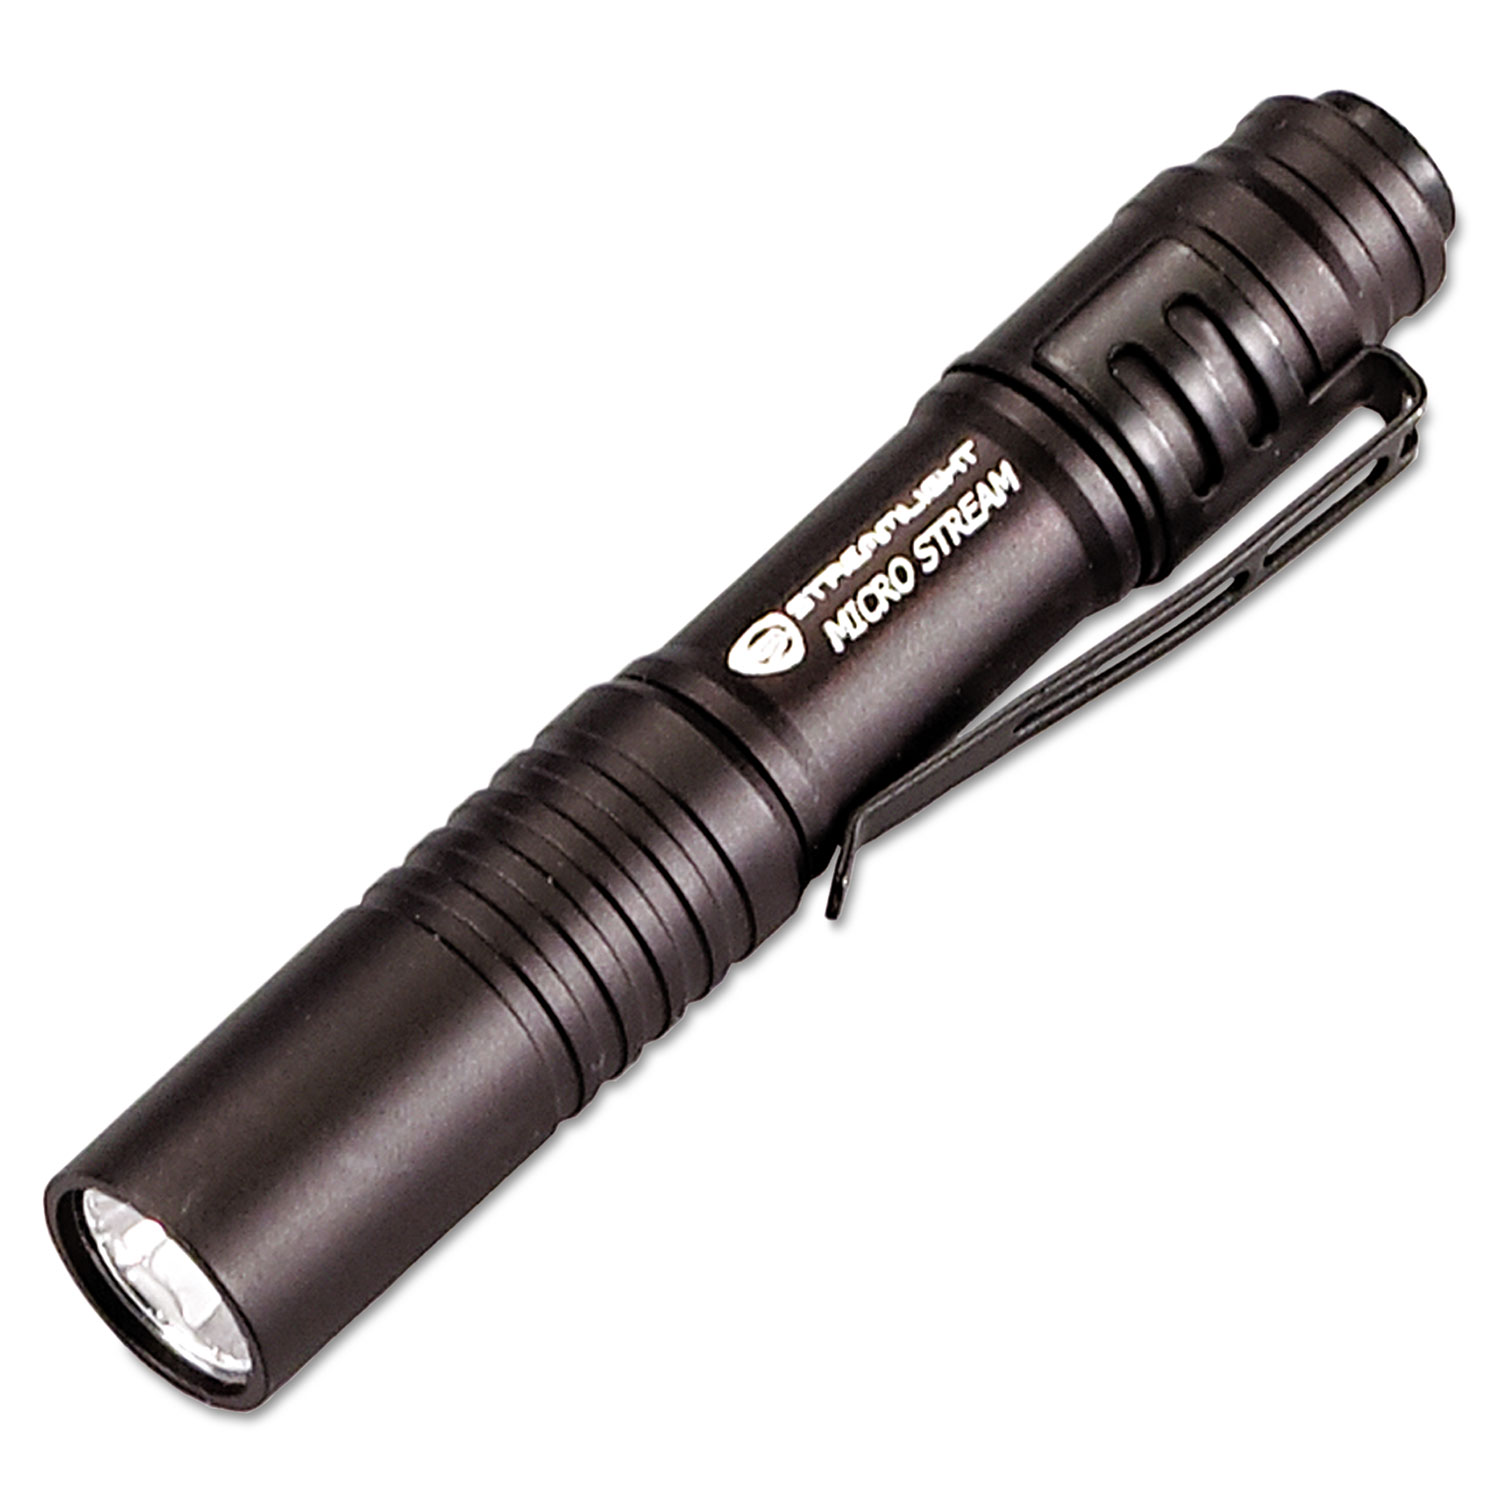 MicroStream LED Pen Light, Black